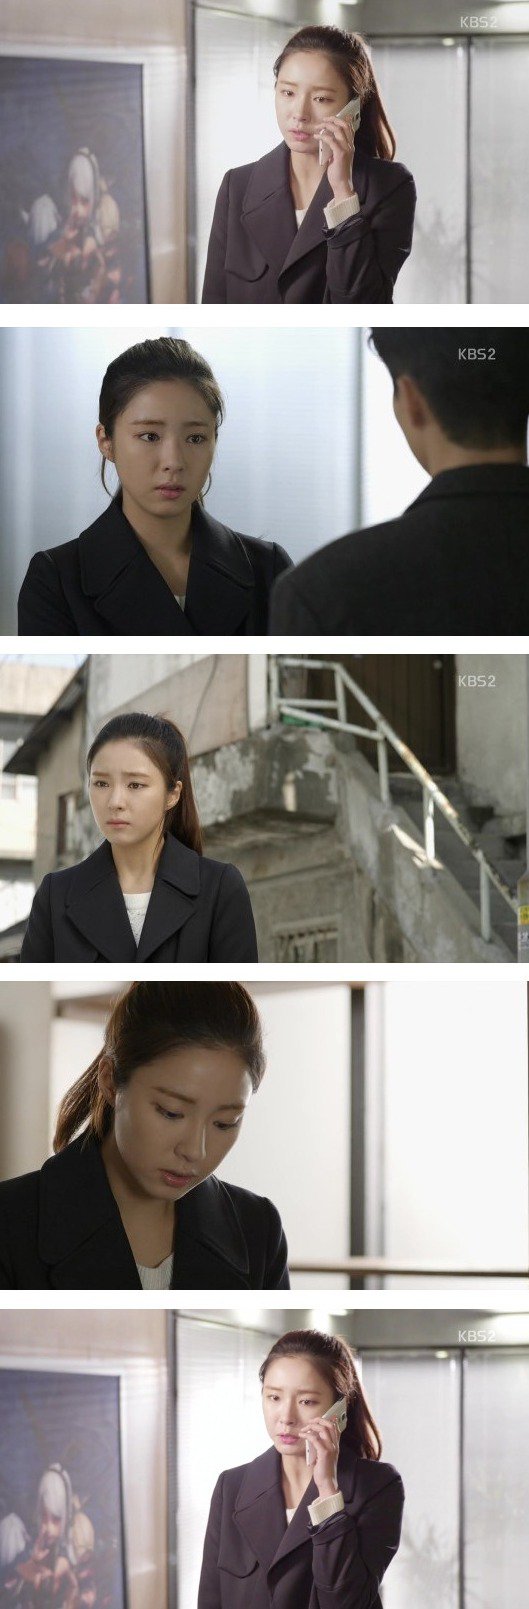 episode 15 captures for the Korean drama 'Blade Man'